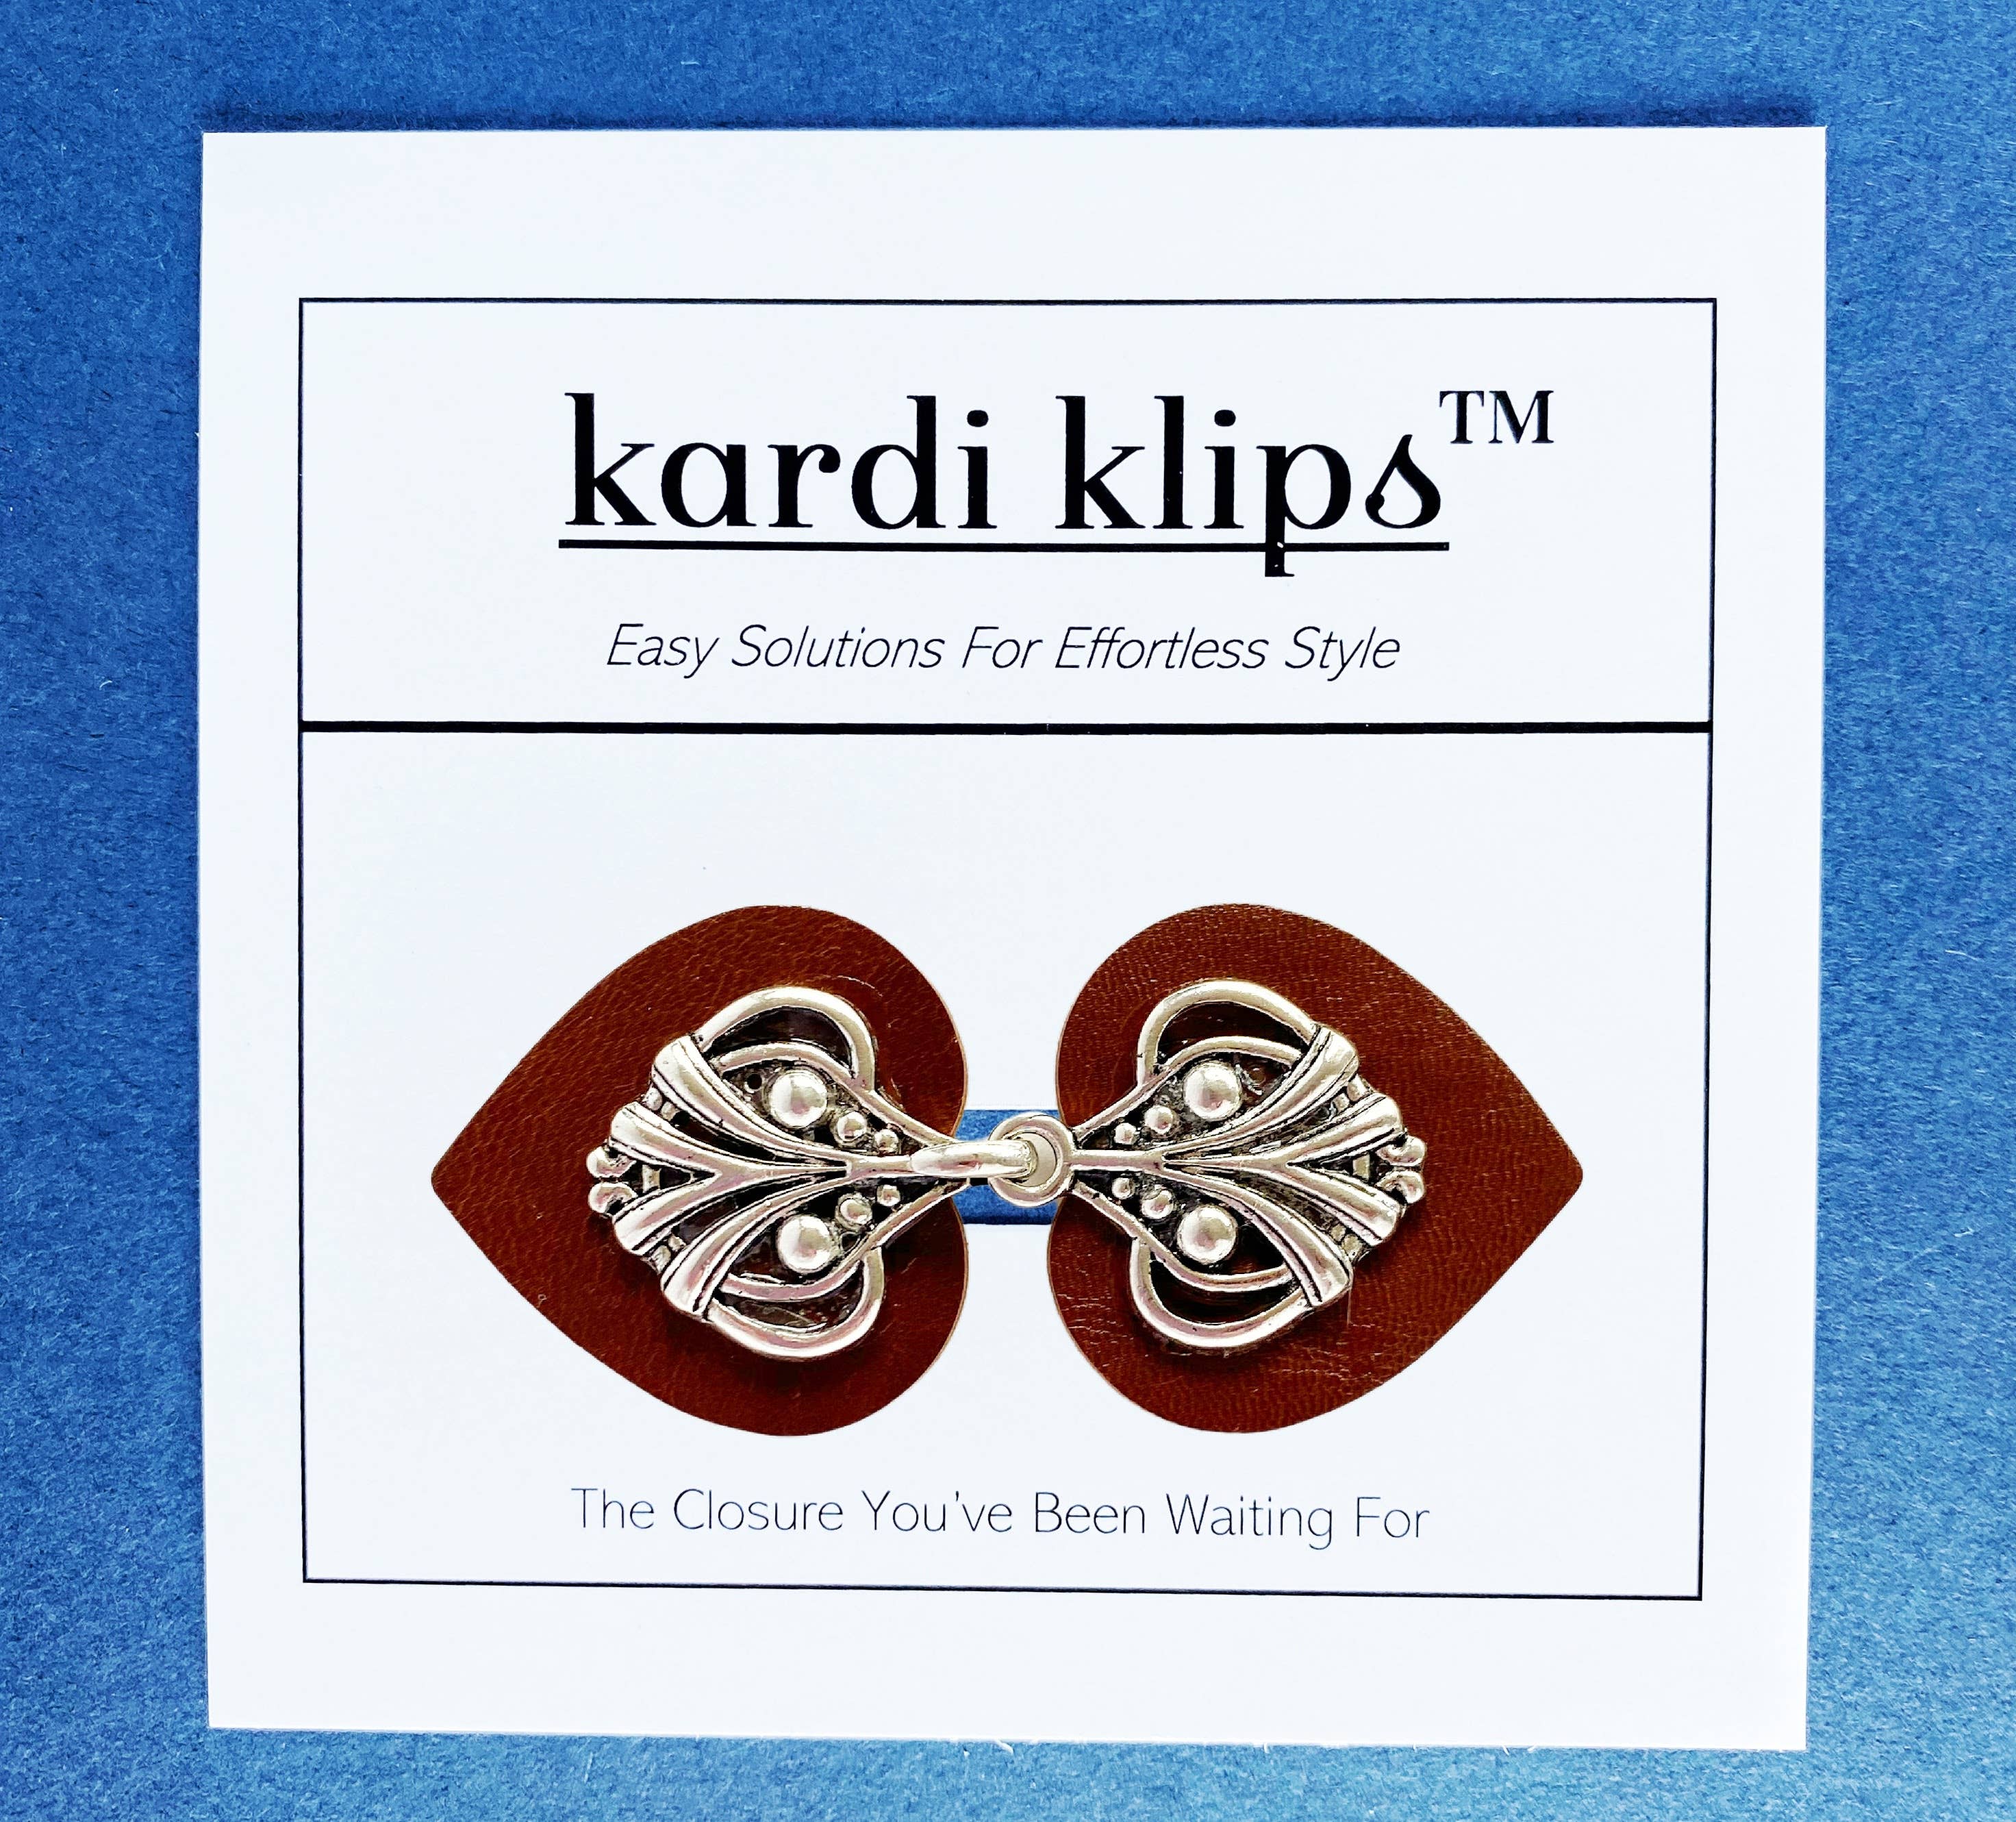 Kardiklips -Dress Clips & Cloak Clasps that give you closure you need.